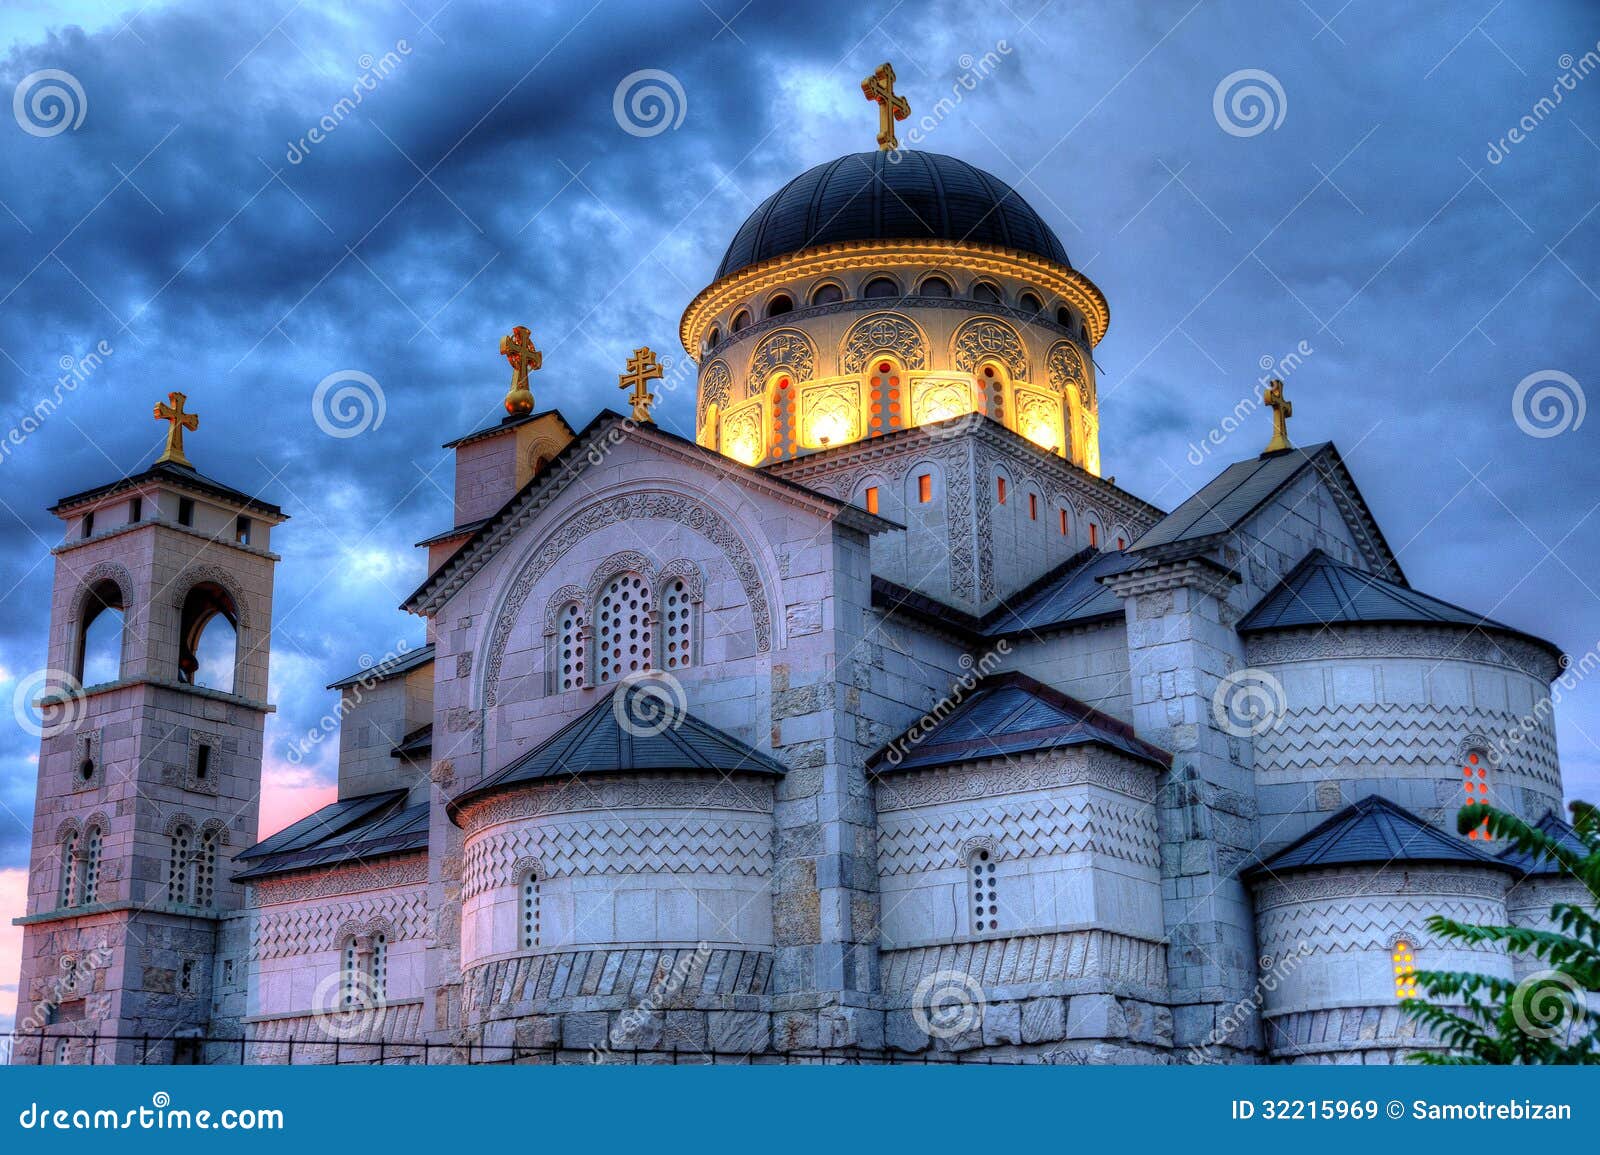 ortodox church of the resurrection of christ in podgorica montenegro